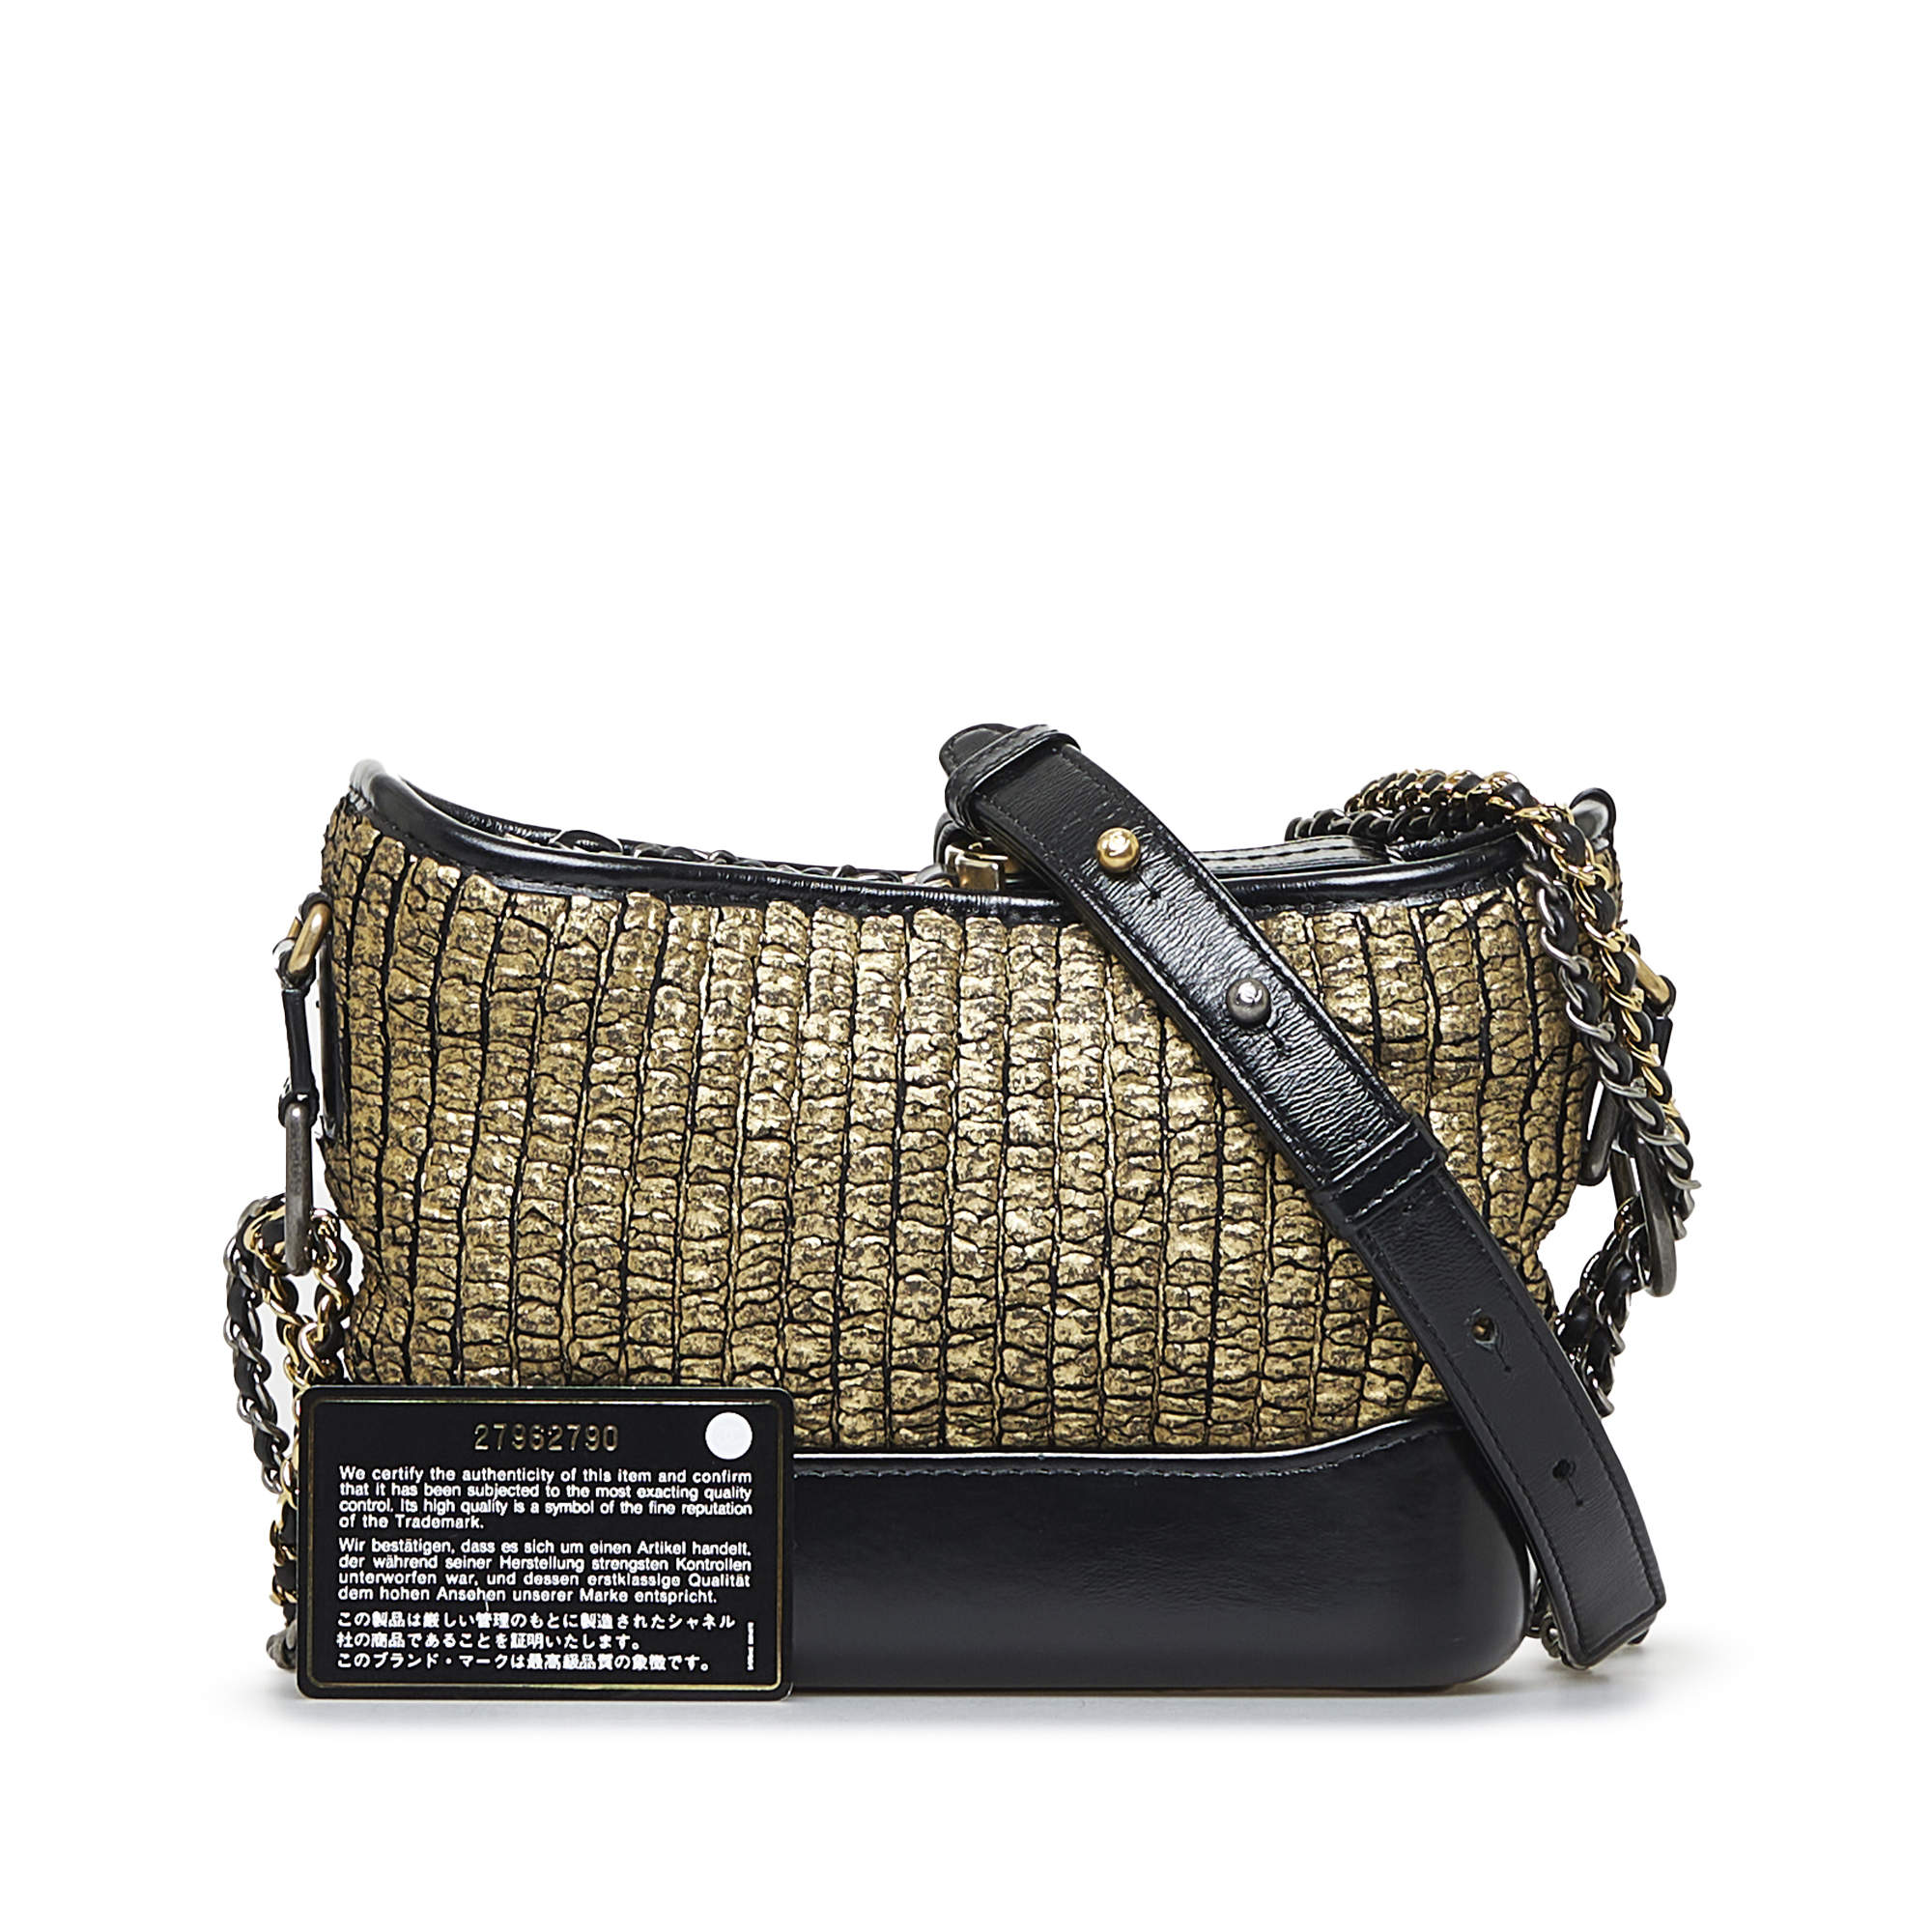 CHANEL, Bags, Authentic Chanel Gabrielle Medium Hobo Bag